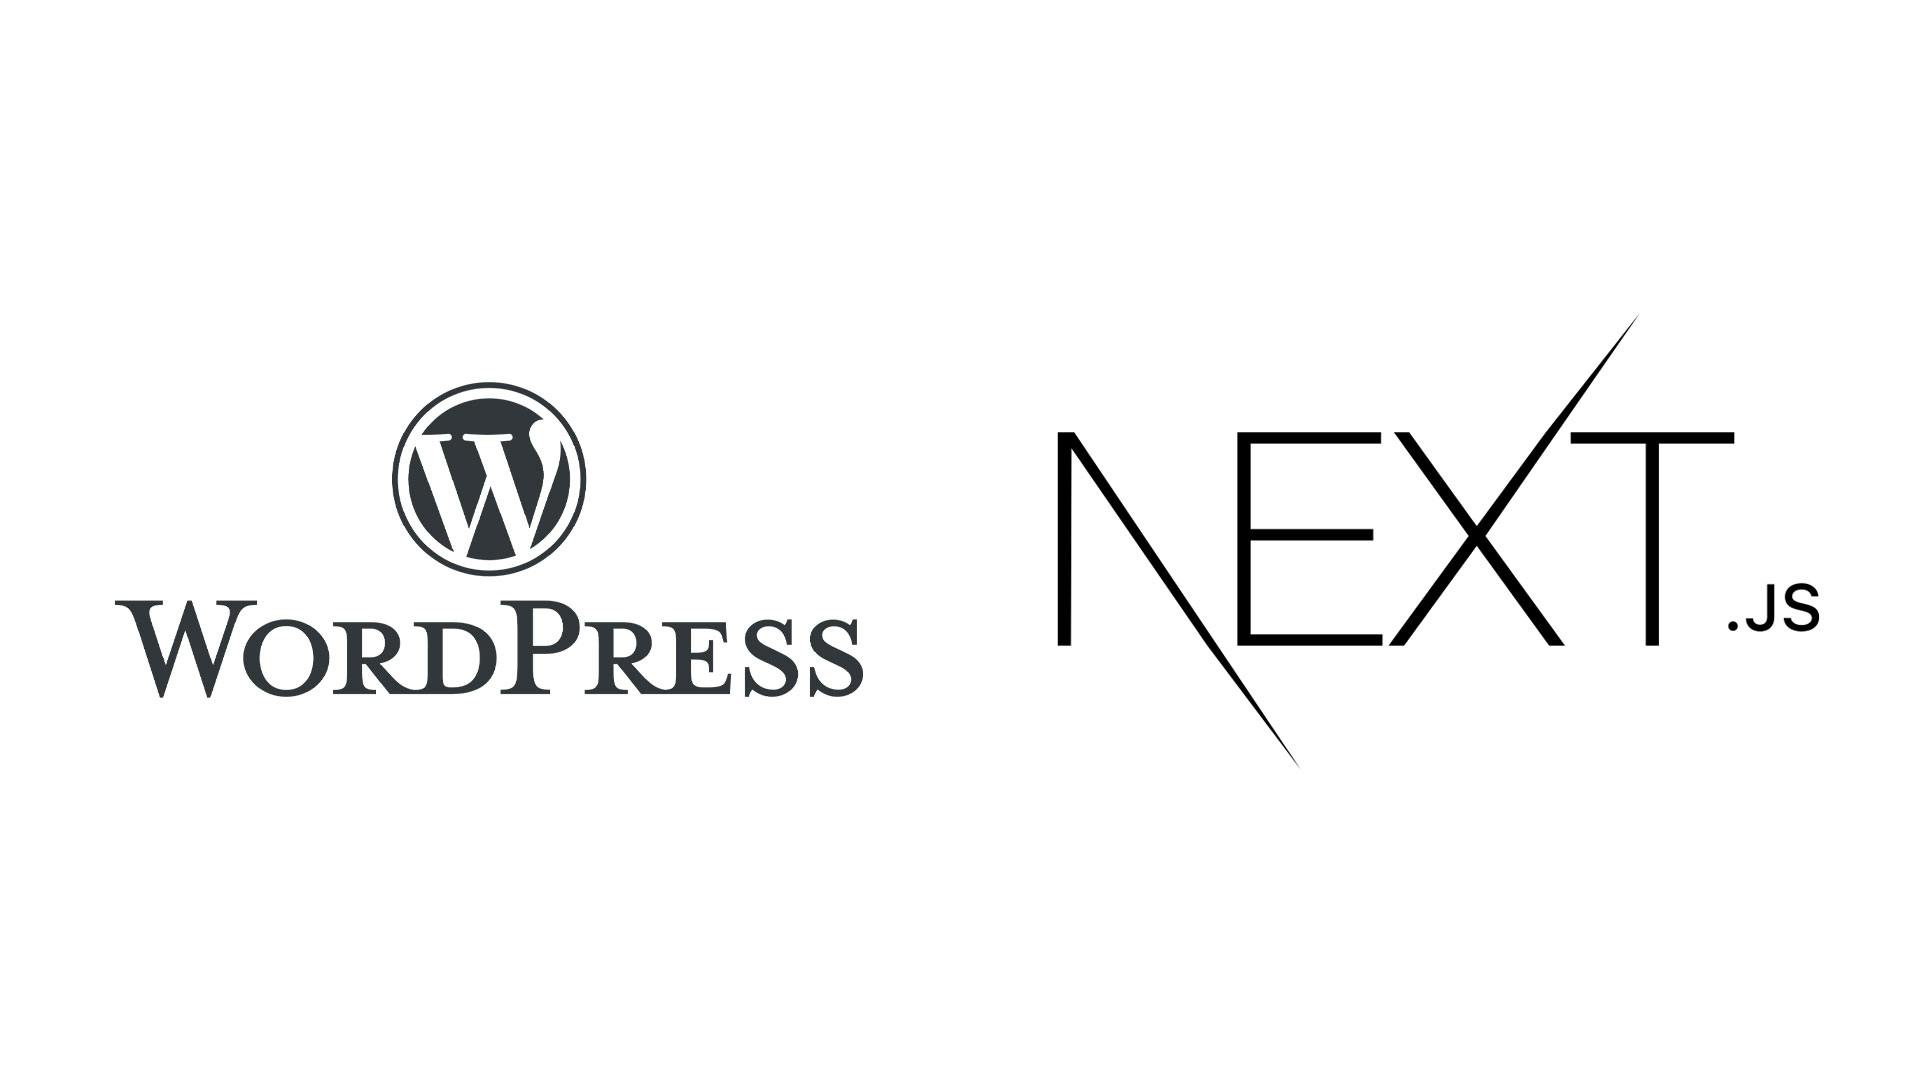 From WordPress to Nextjs